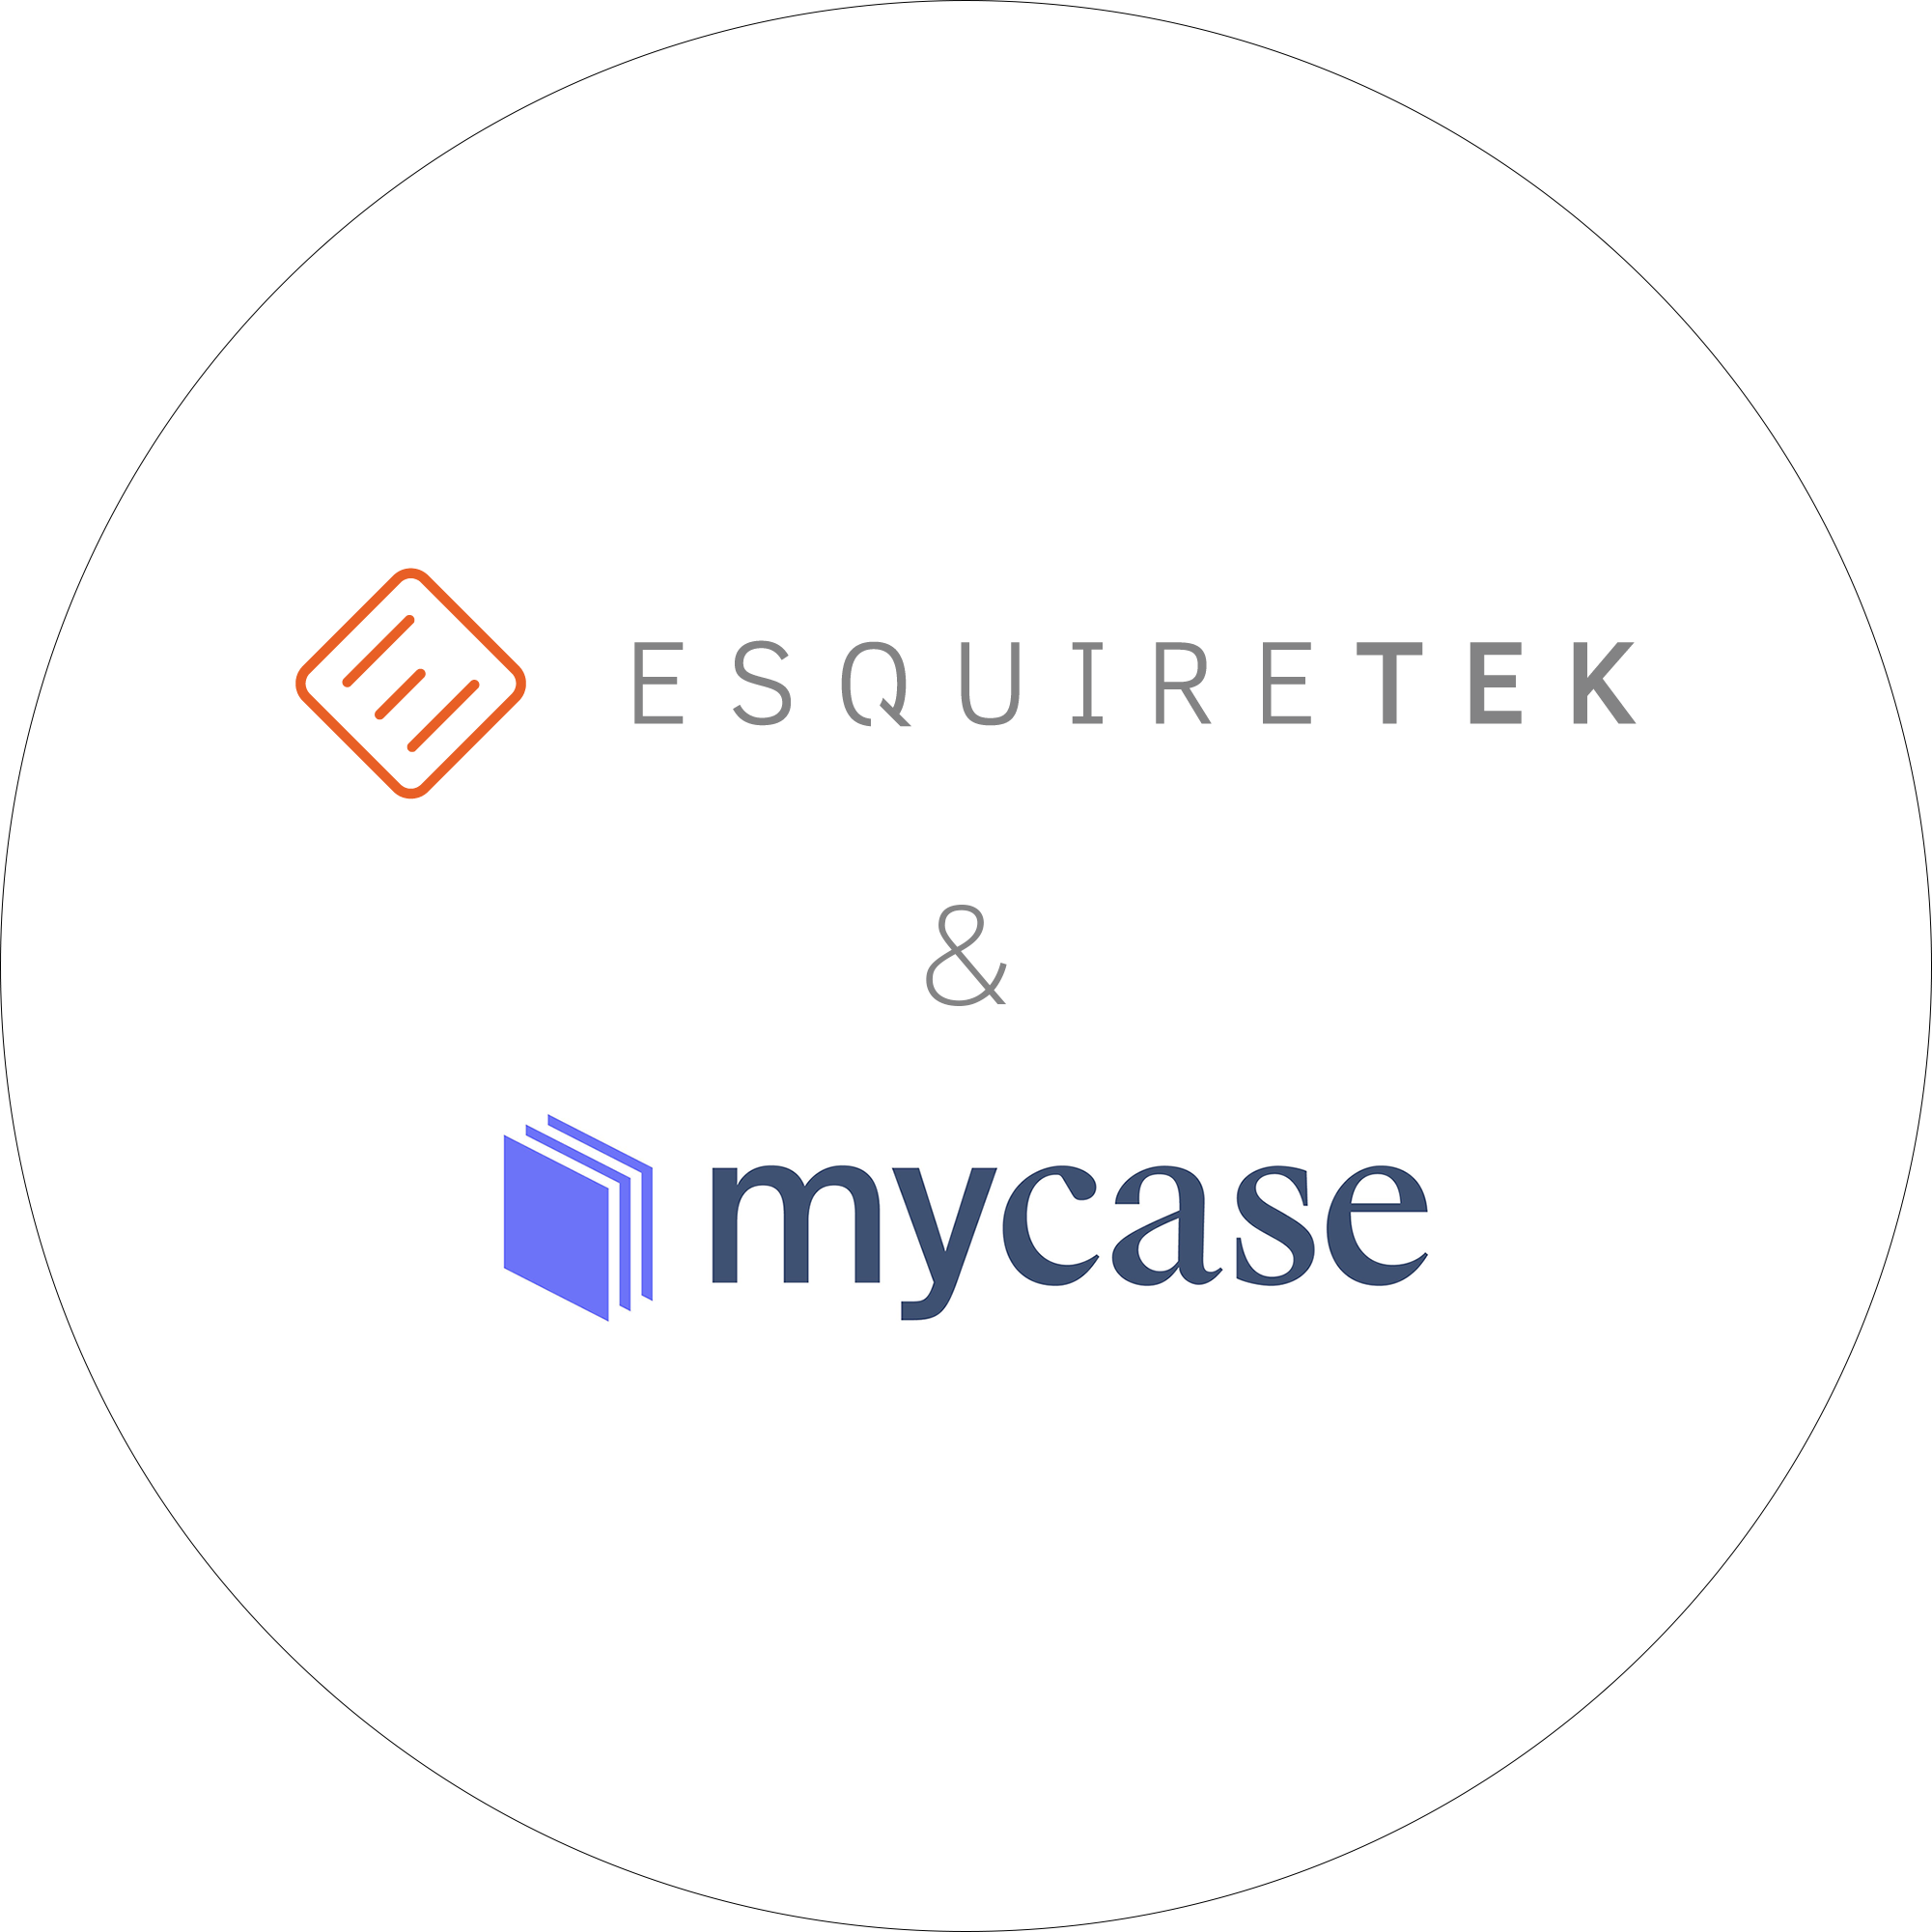 mycase esquiretek logo